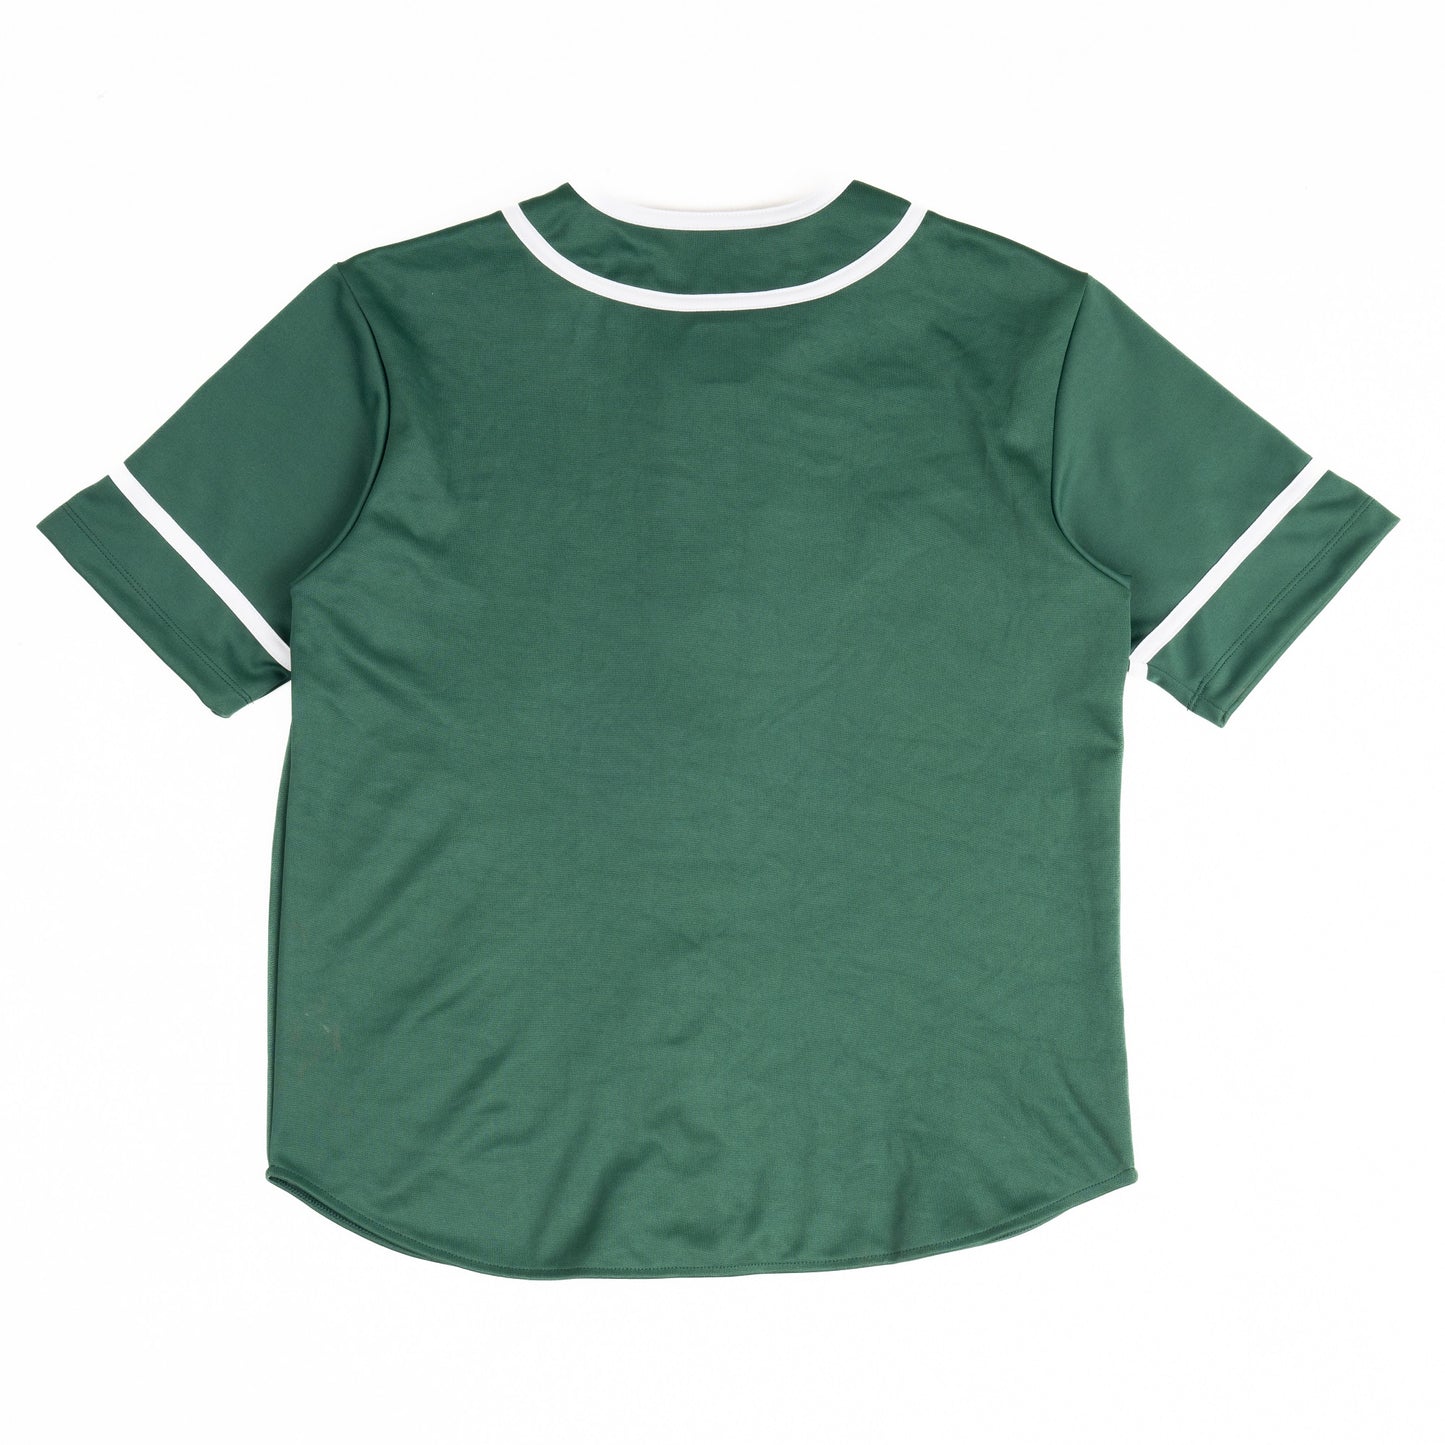 AZA Shirt Baseball Classic Edition - Green